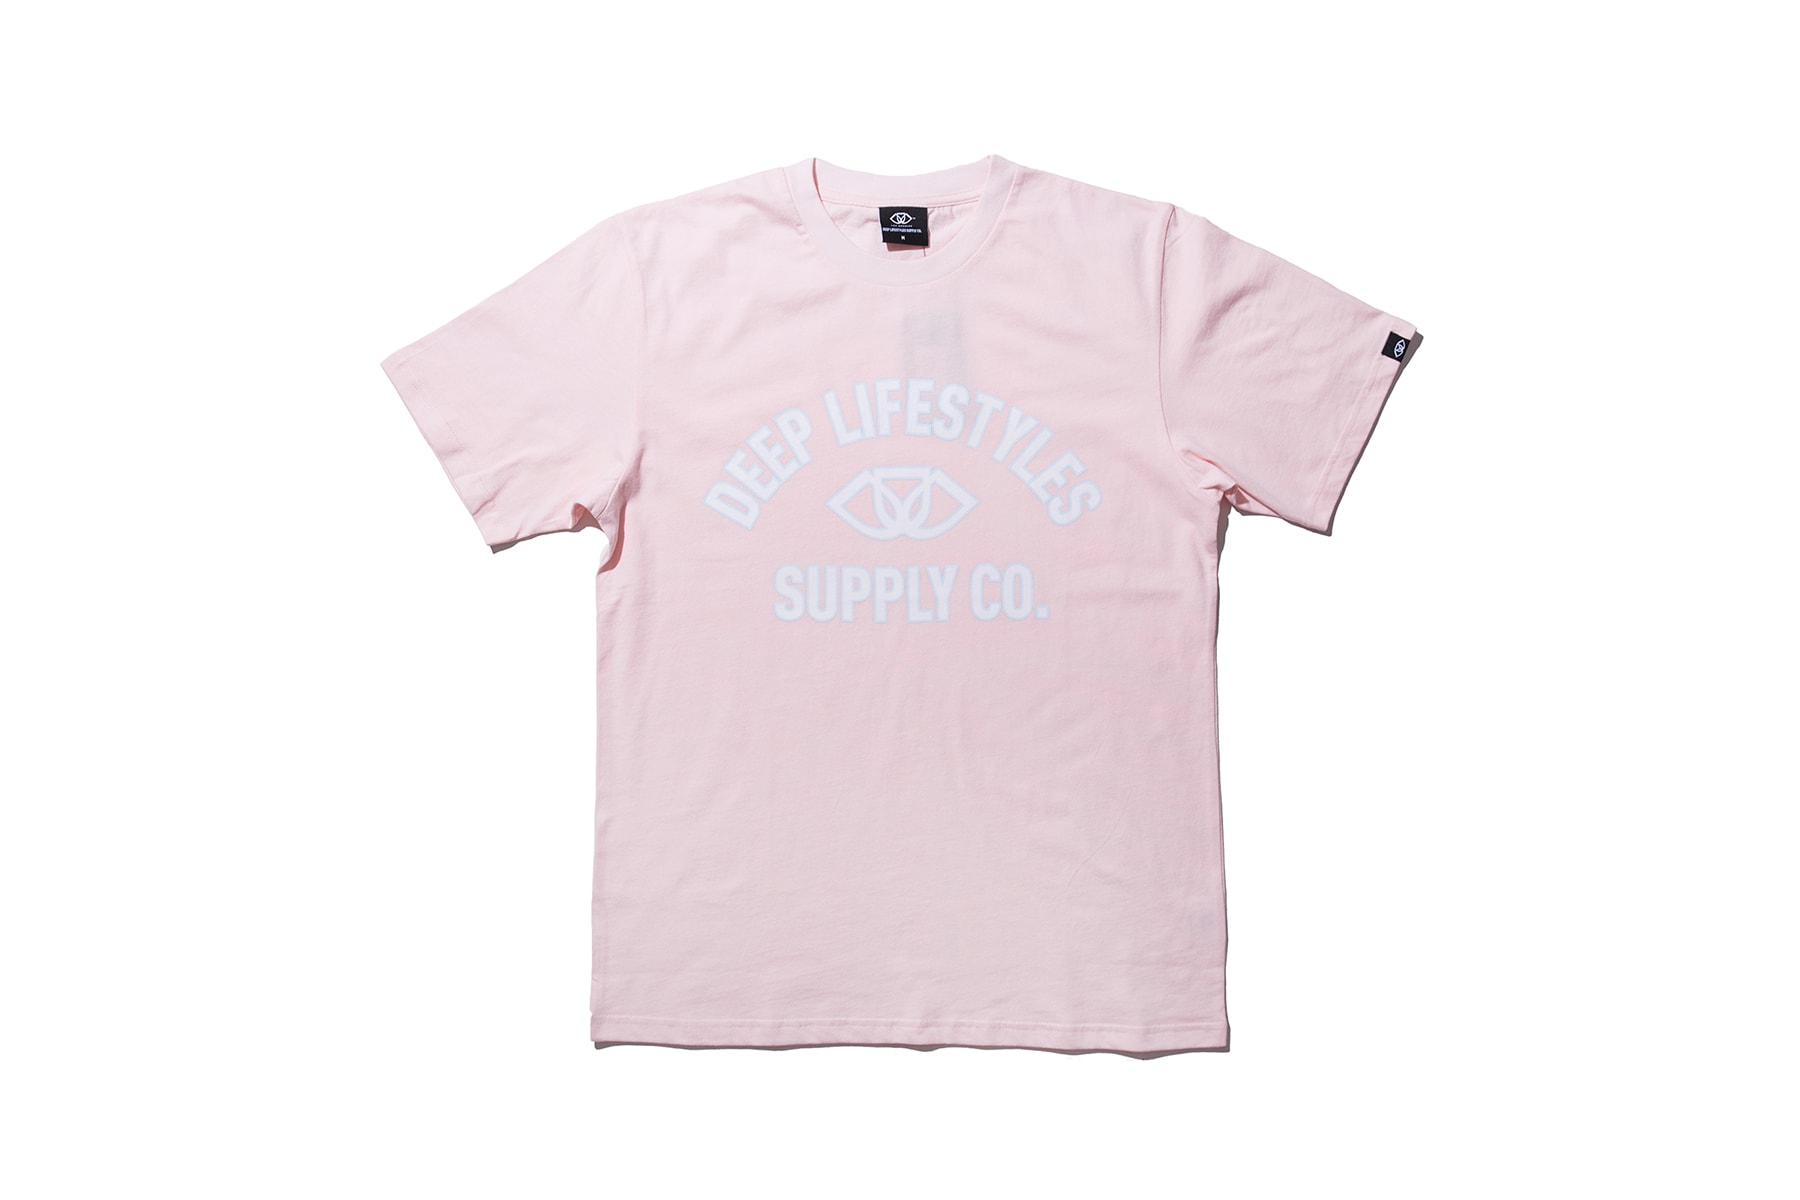 Deep Lifestyles Supply Co. 2017 春夏新品上架